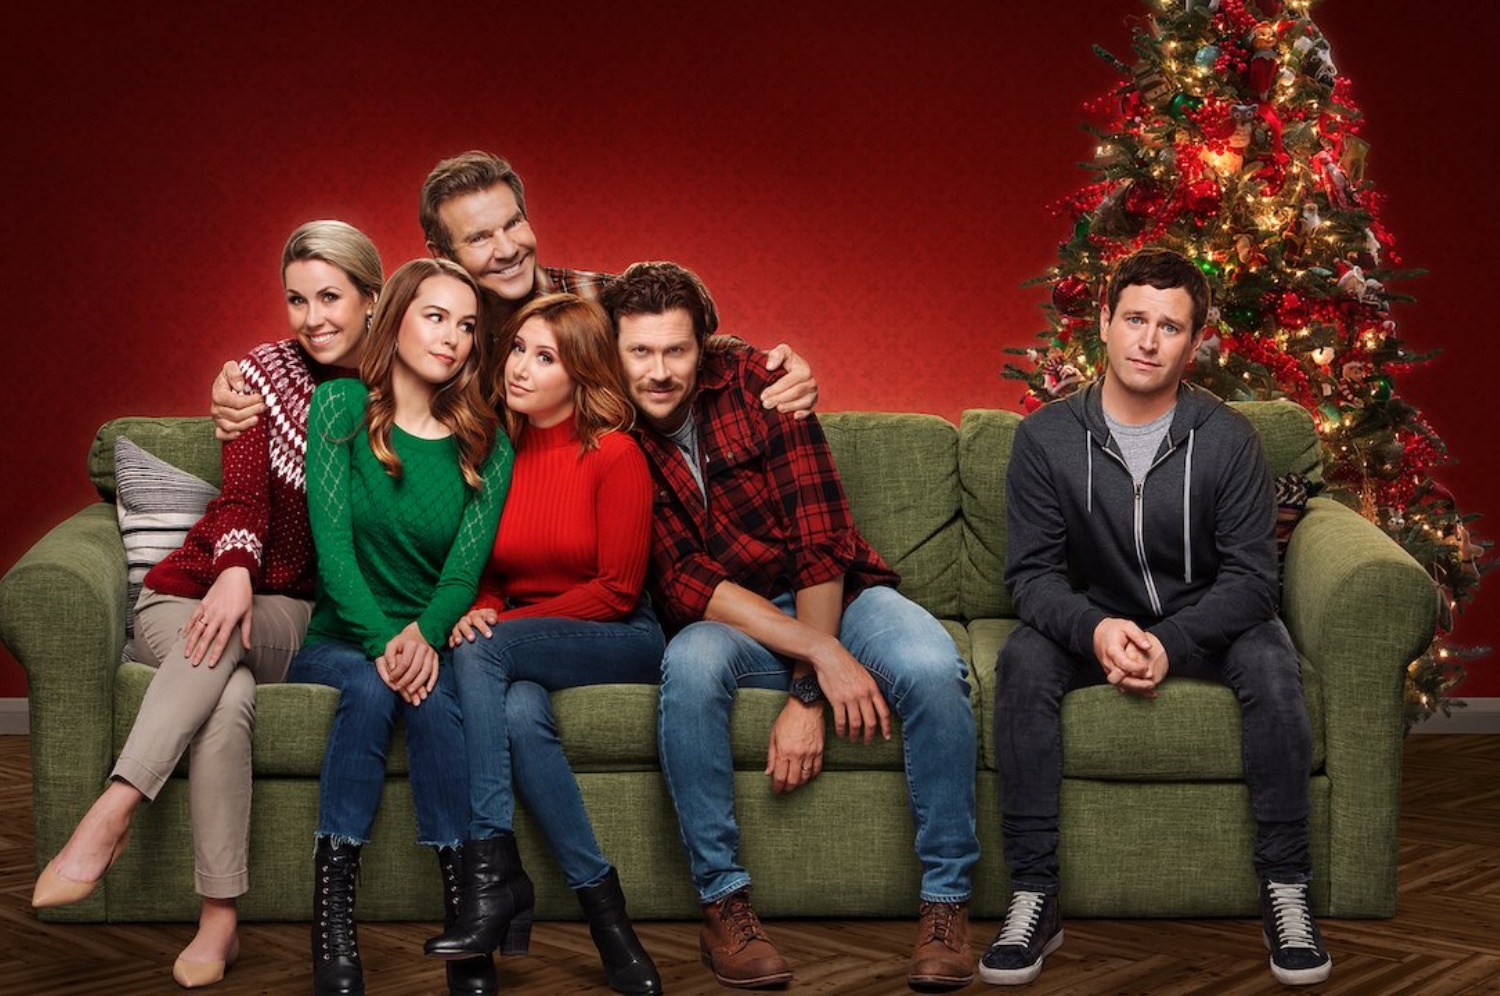 Vale a pena assistir 'Feliz Natal e Tal' na Netflix?